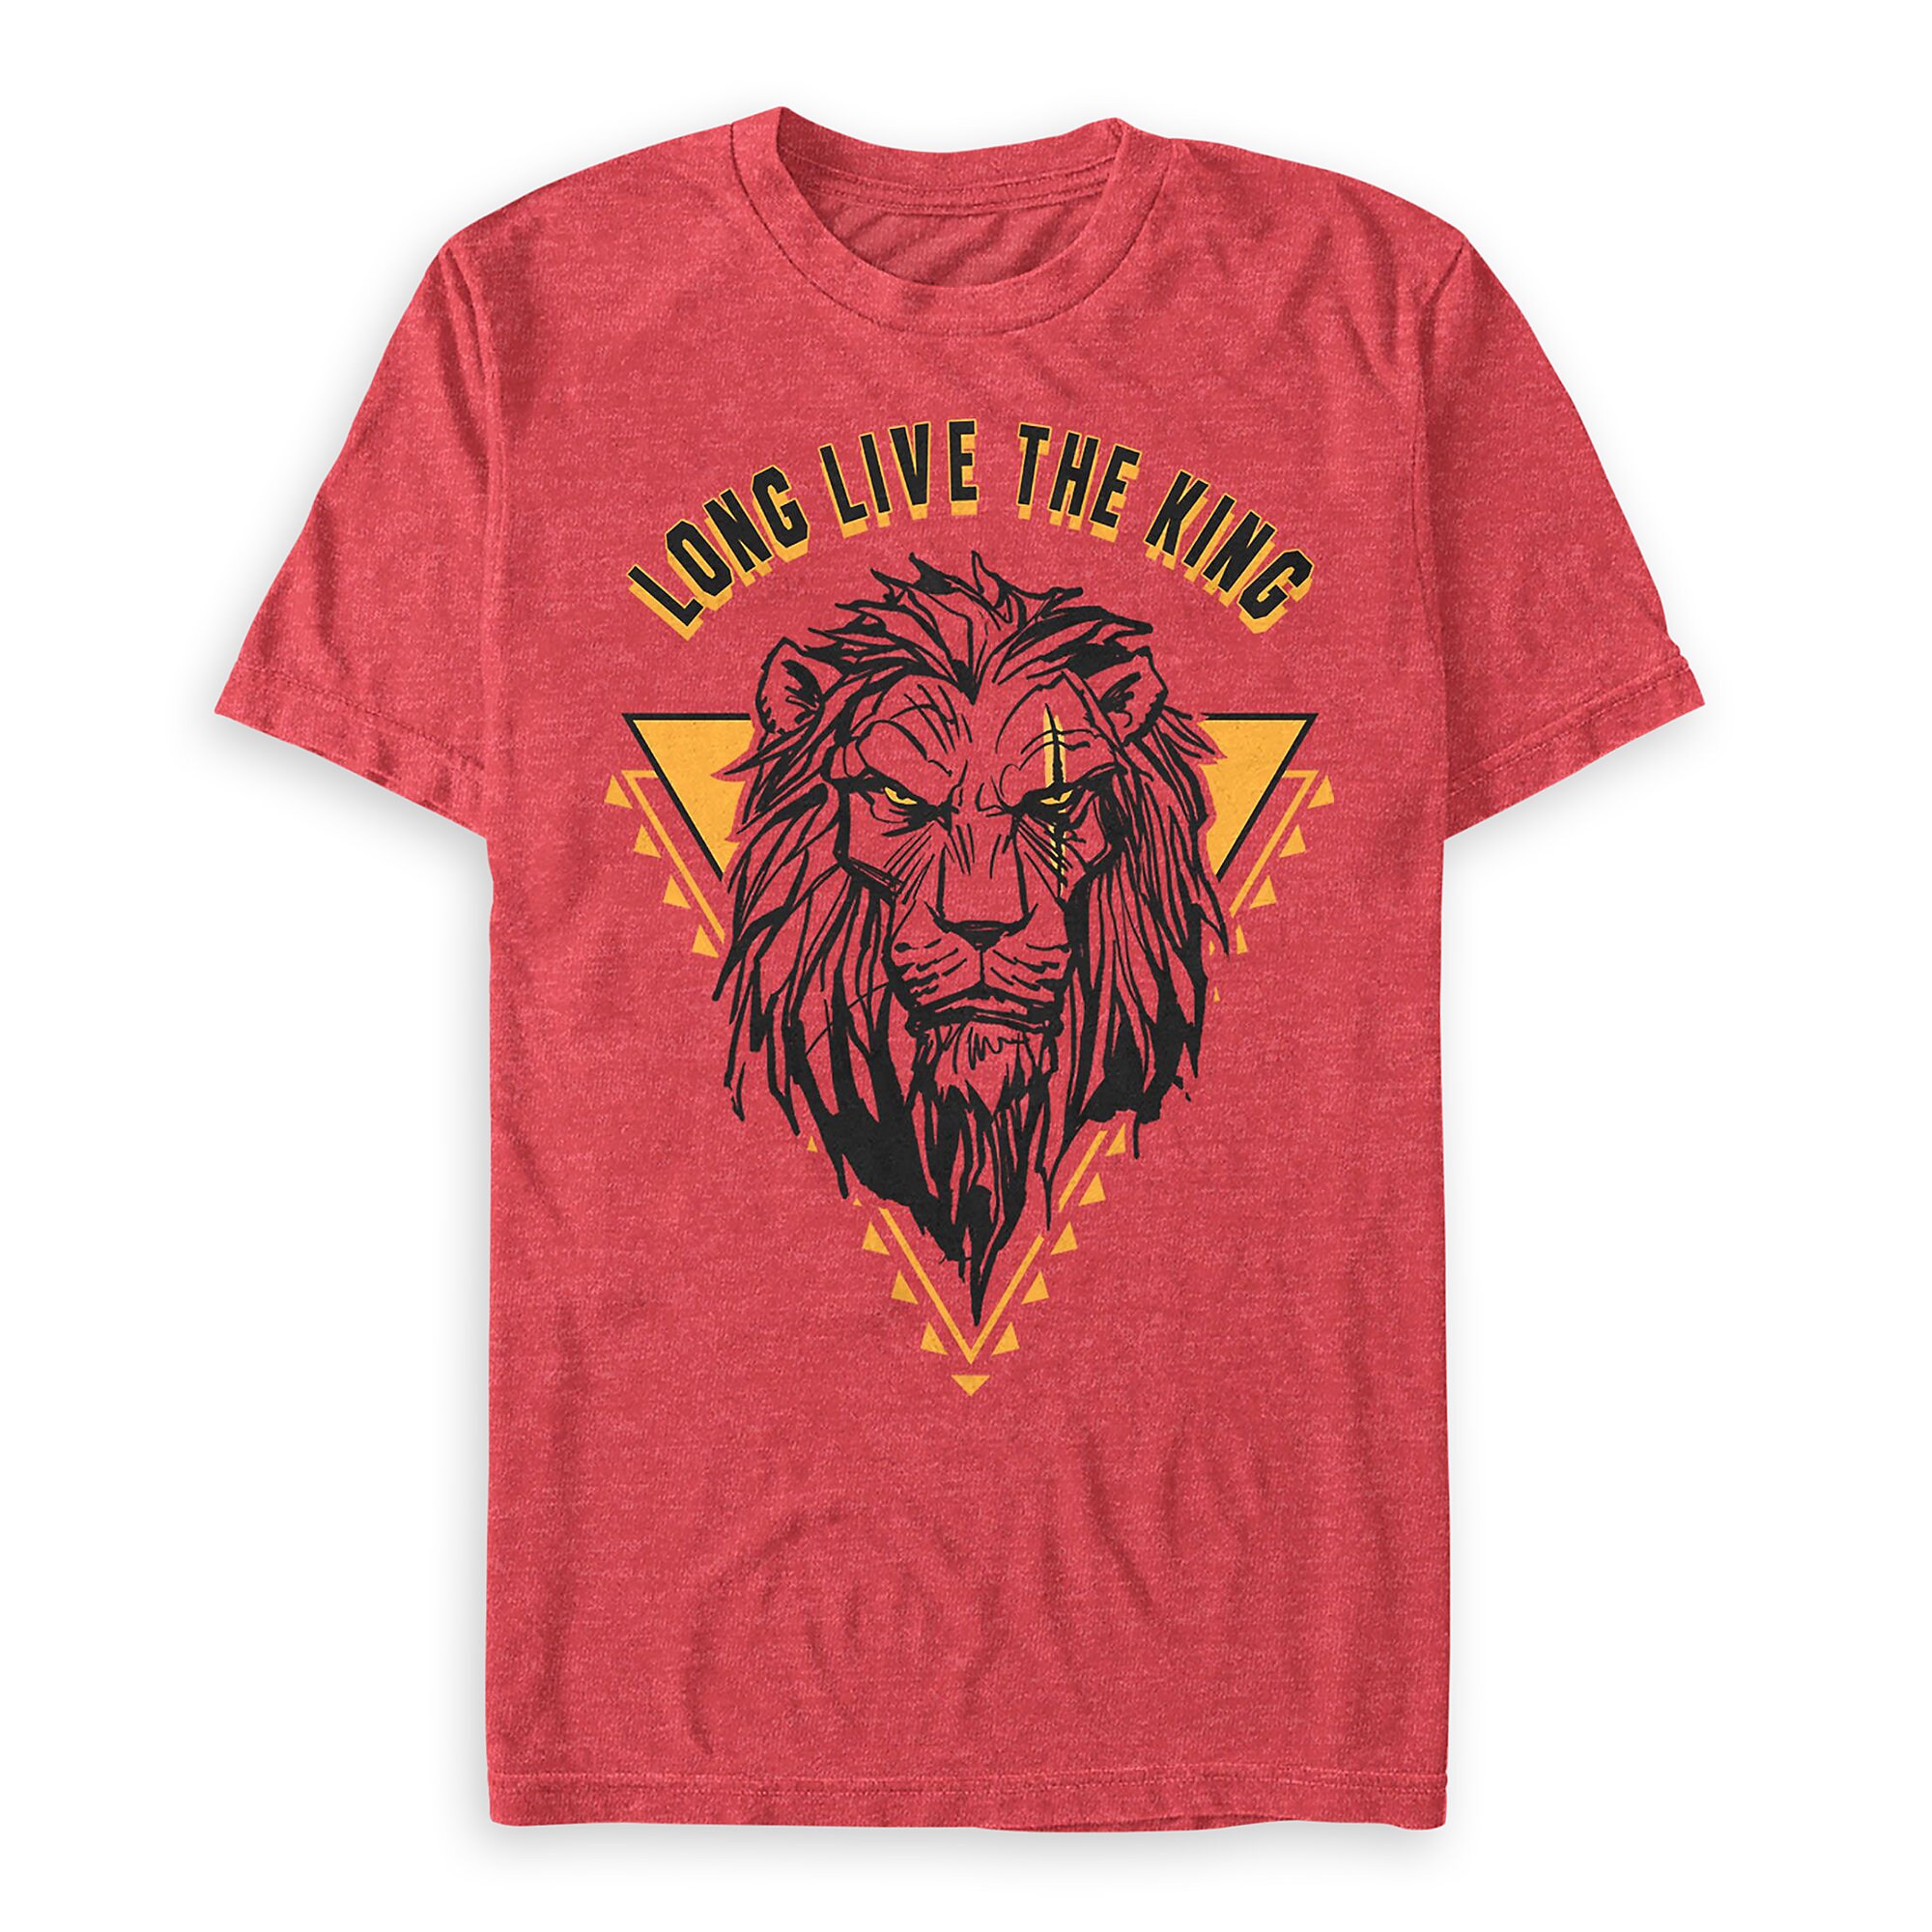 Scar T-Shirt for Men - The Lion King 2019 Film